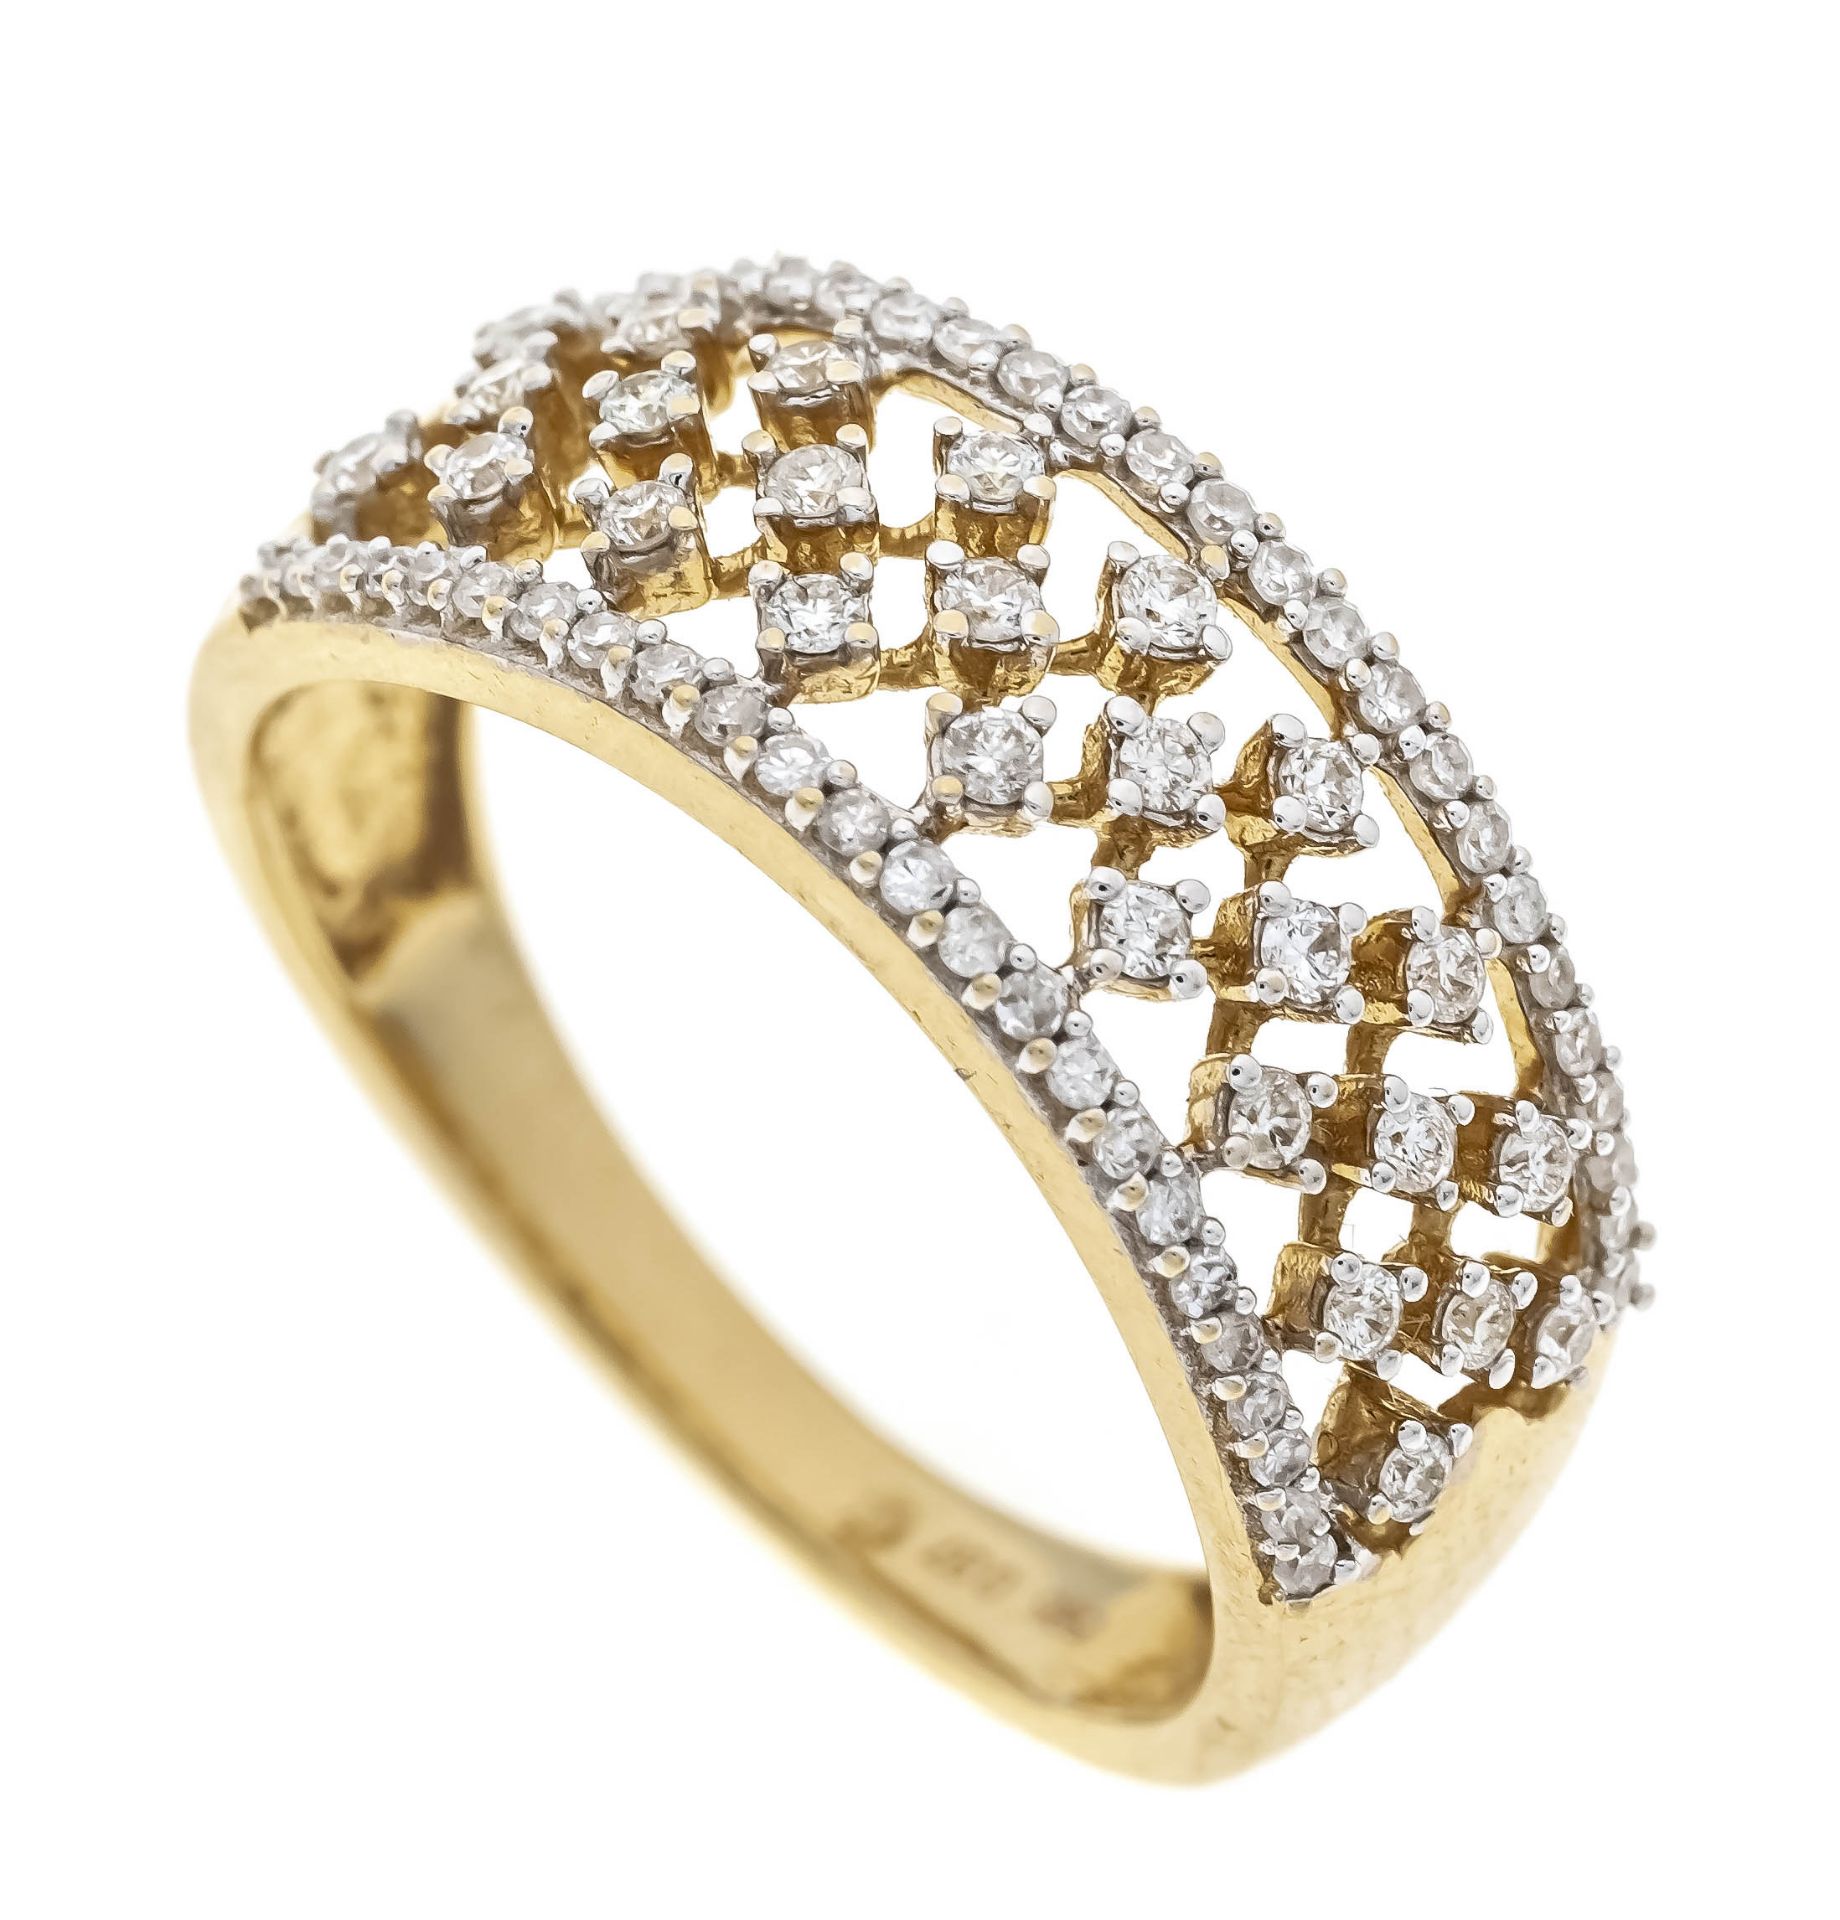 Filigree brilliant-cut diamond ring GG/WG 585/000 with 26 brilliant-cut diamonds and 48 octagonal